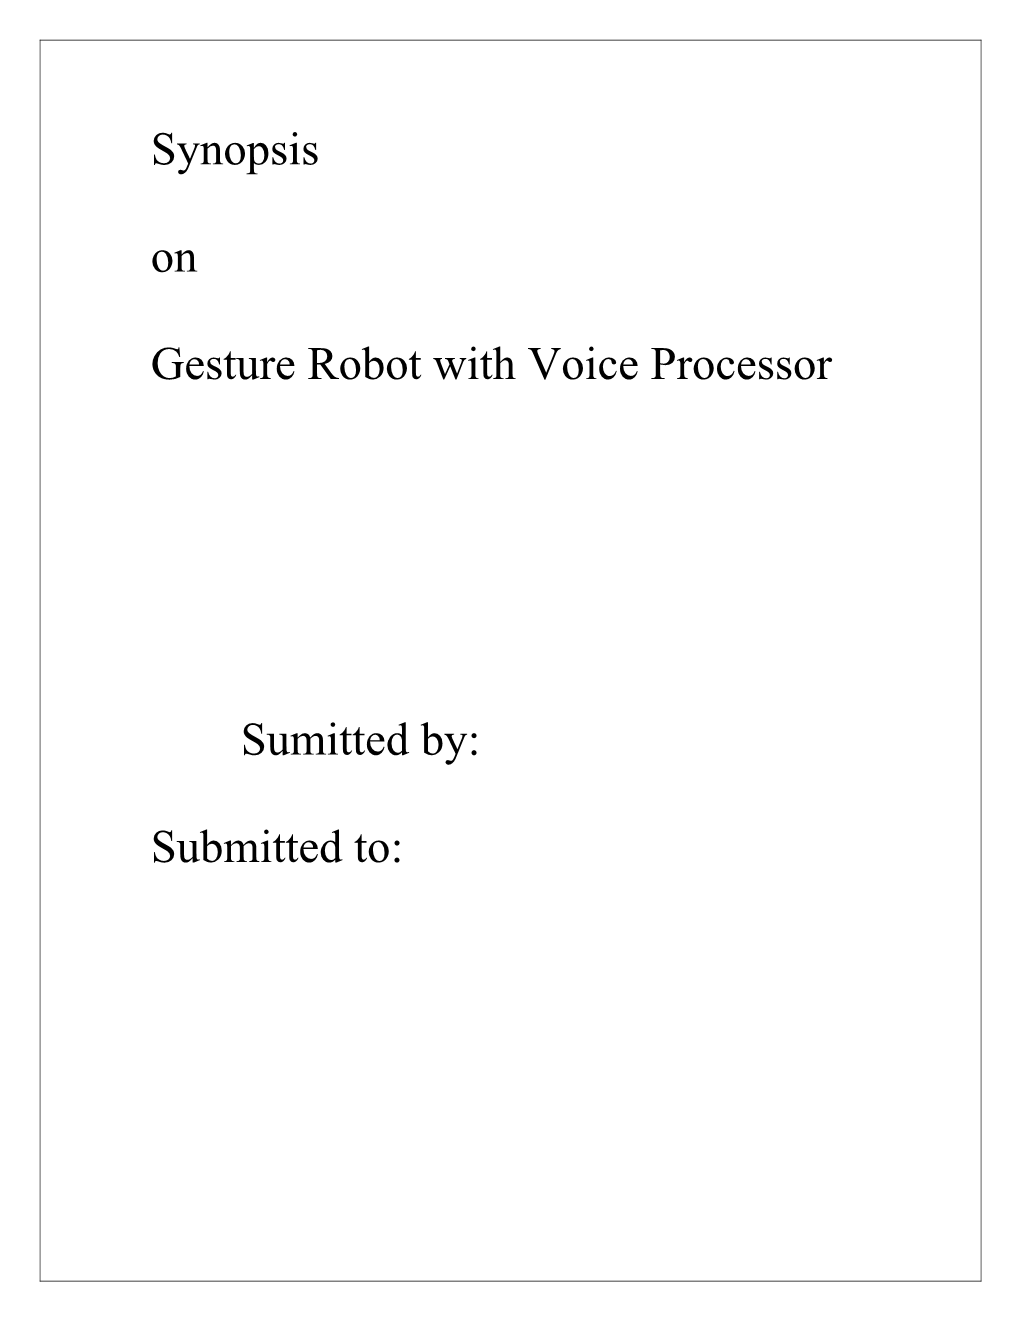 Gesture Robot with Voice Processor